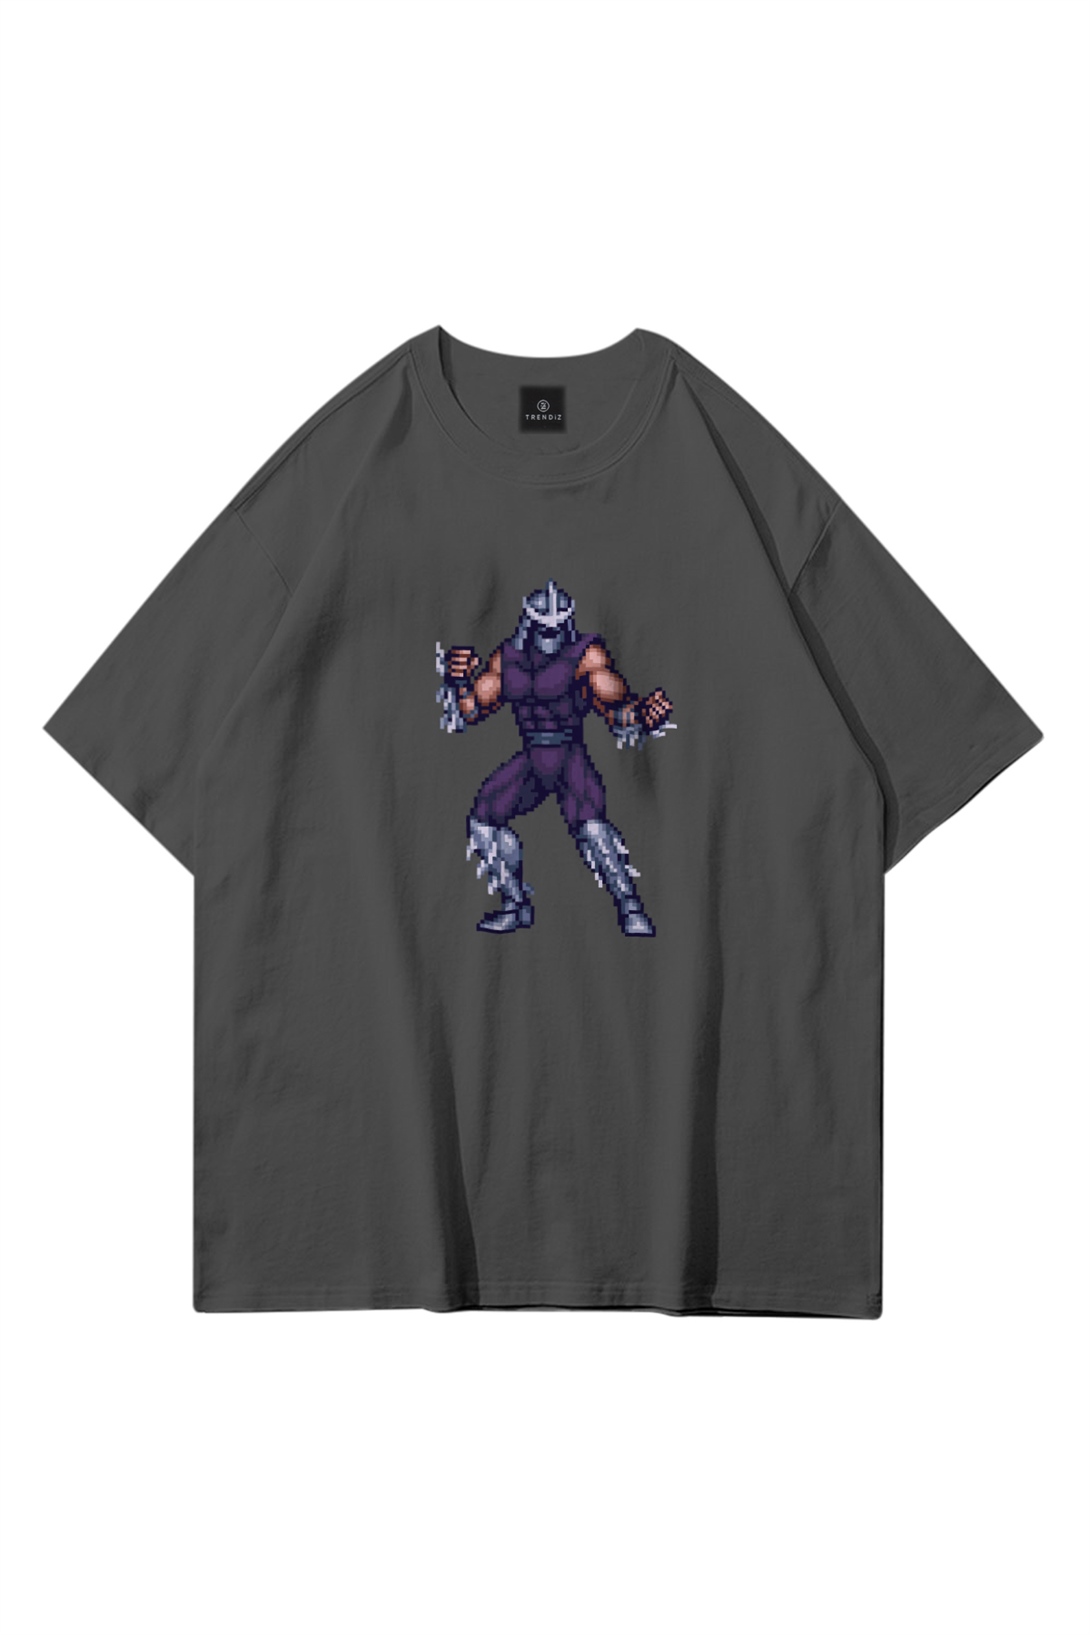 Trendiz Unisex Shredder Ninja Turtles Antrasit Tshirt